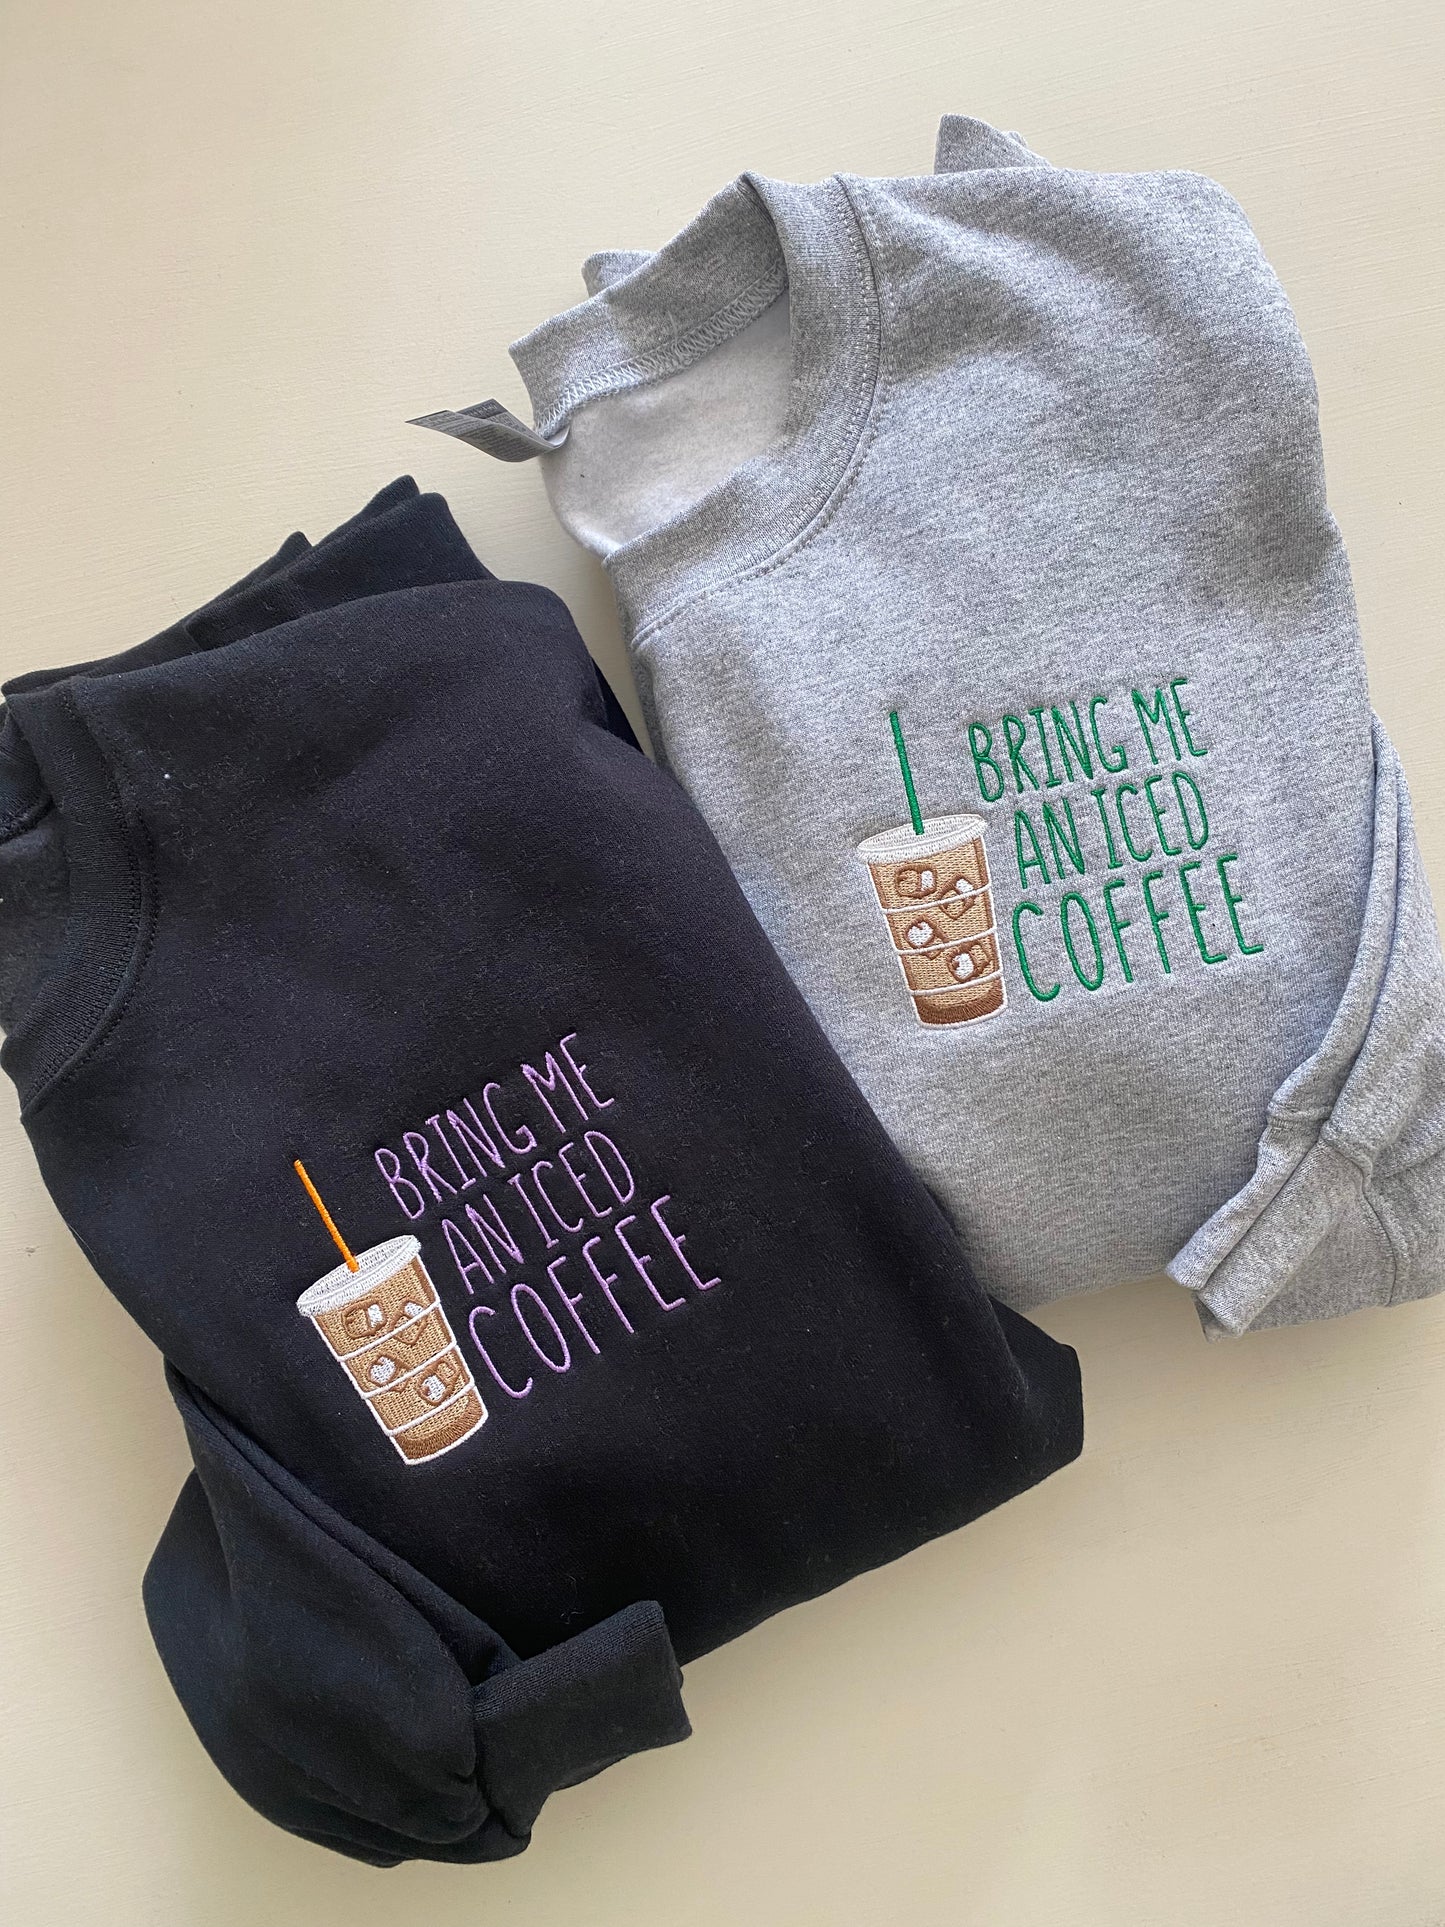 Bring Me an Iced Coffee Shirt -- Tee OR Sweatshirt!